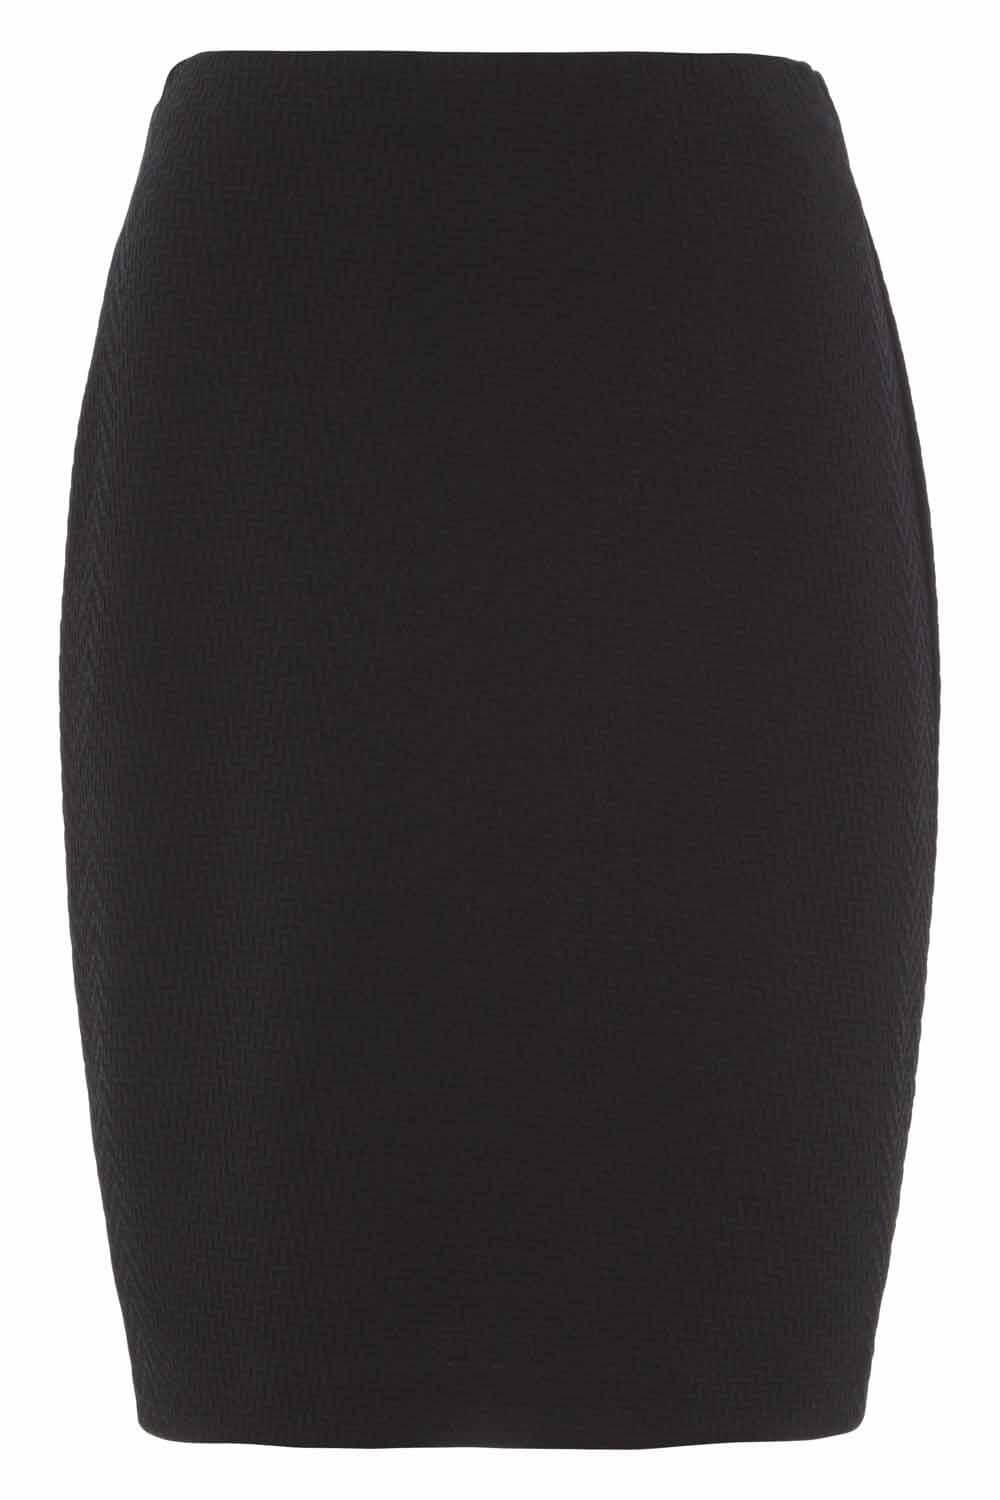 Textured Mini Skirt in Black - Roman Originals UK